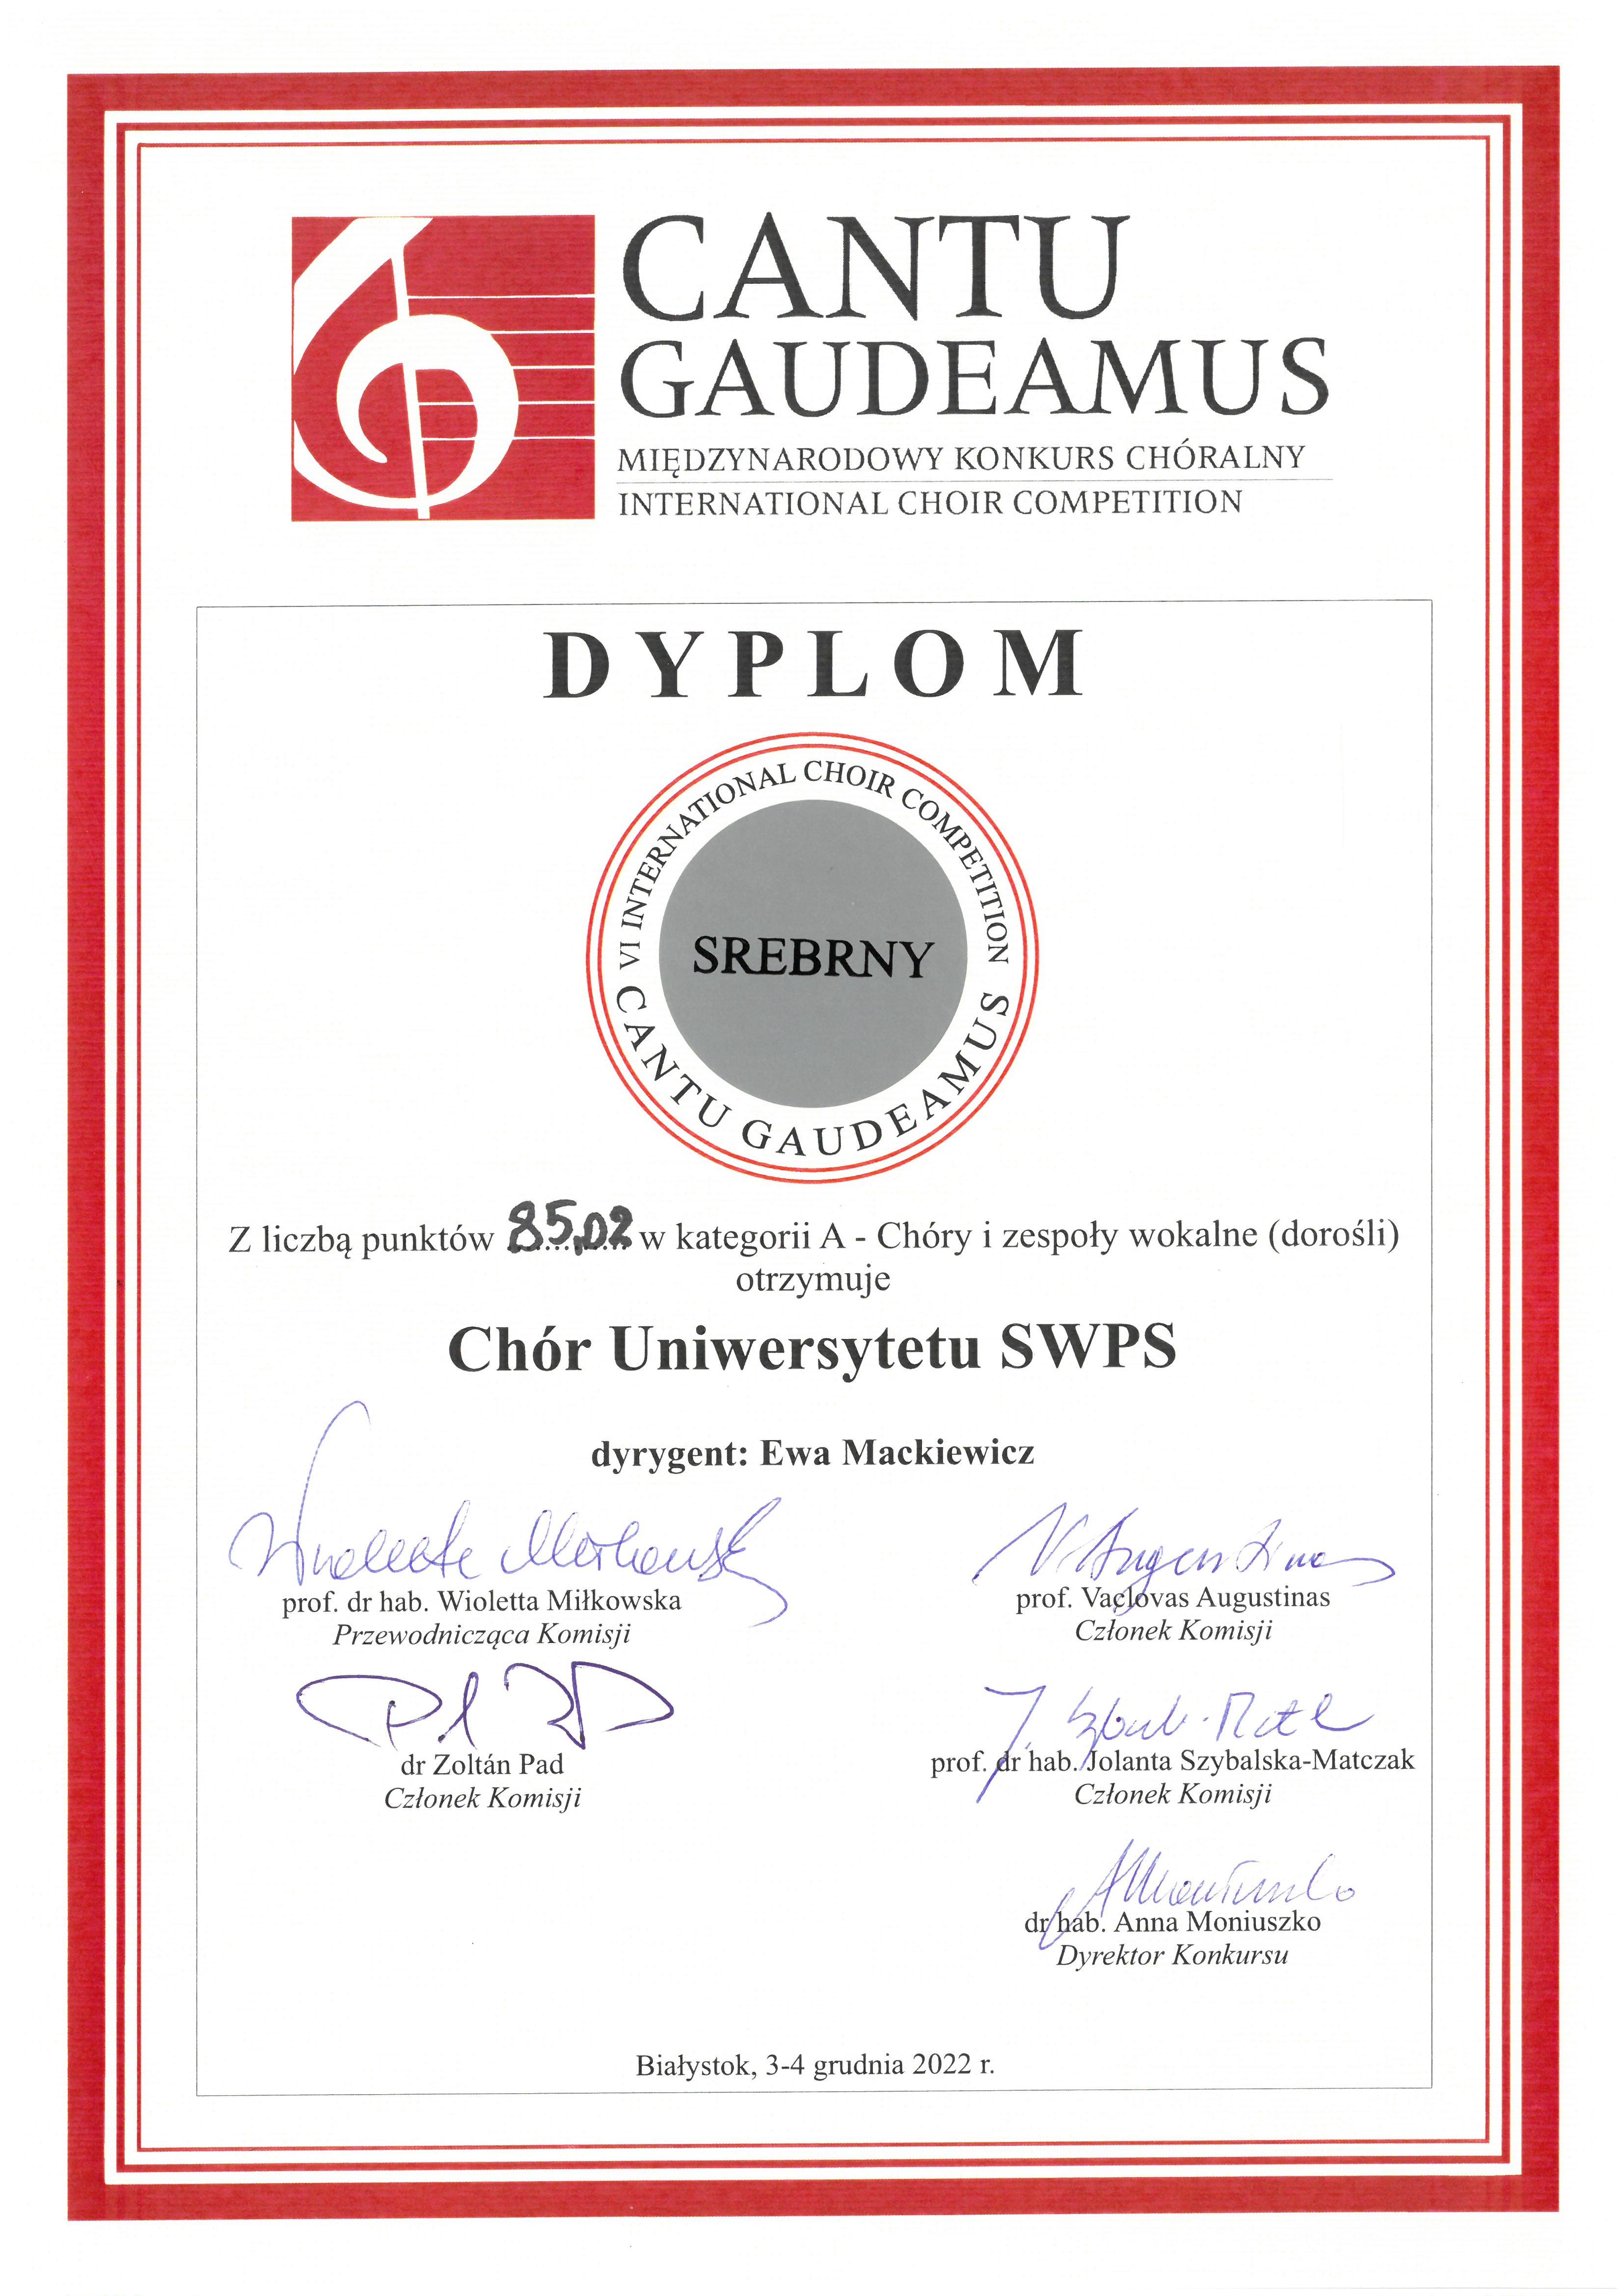 Dyplom Cantu Gaudeamus